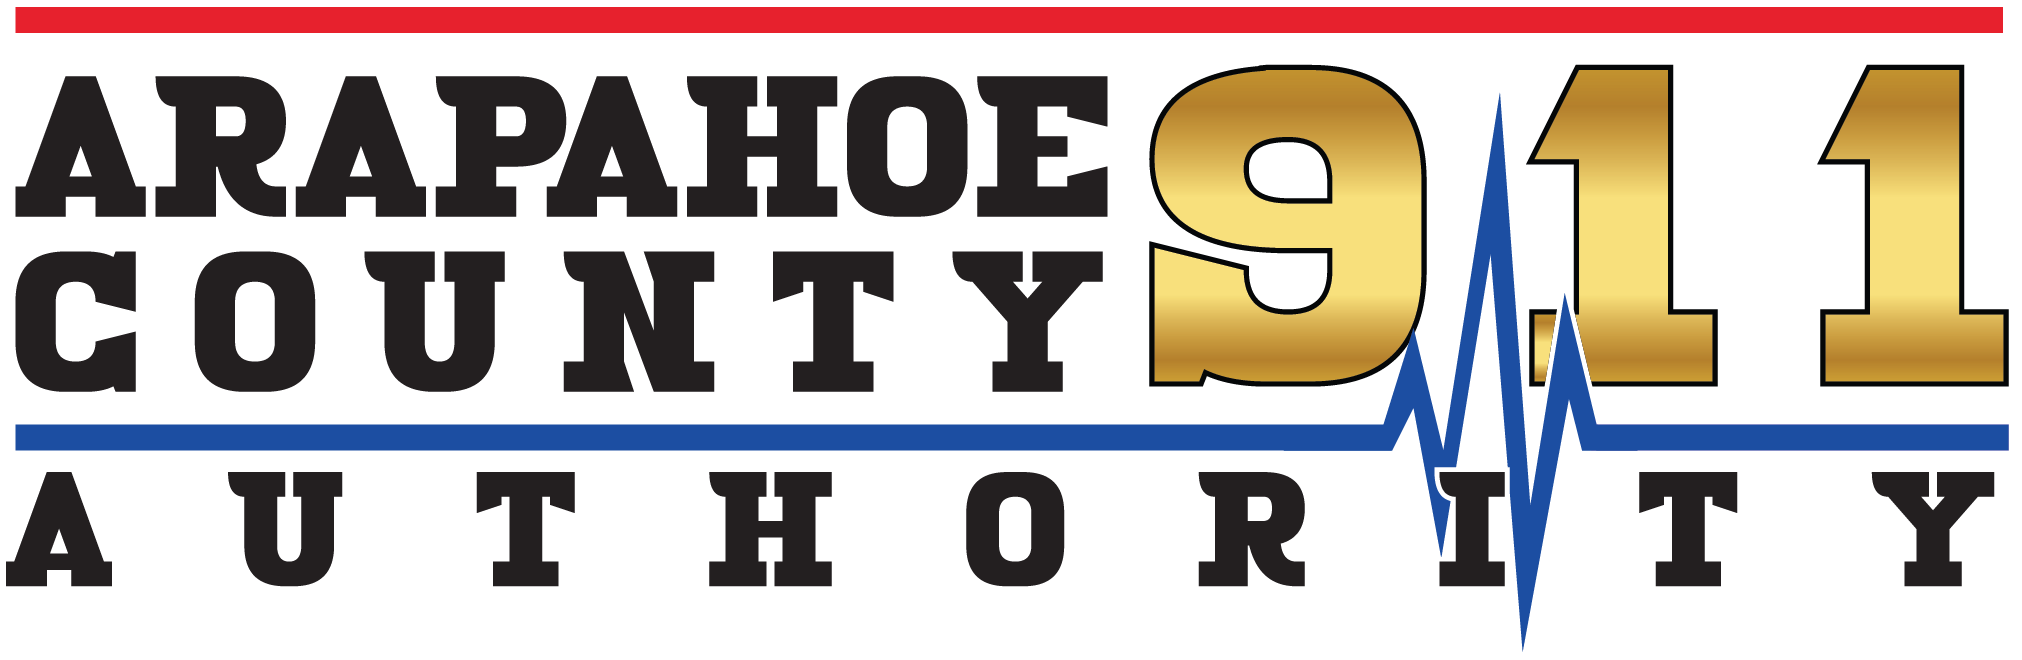 Arapahoe County 9-1-1 Authority Home